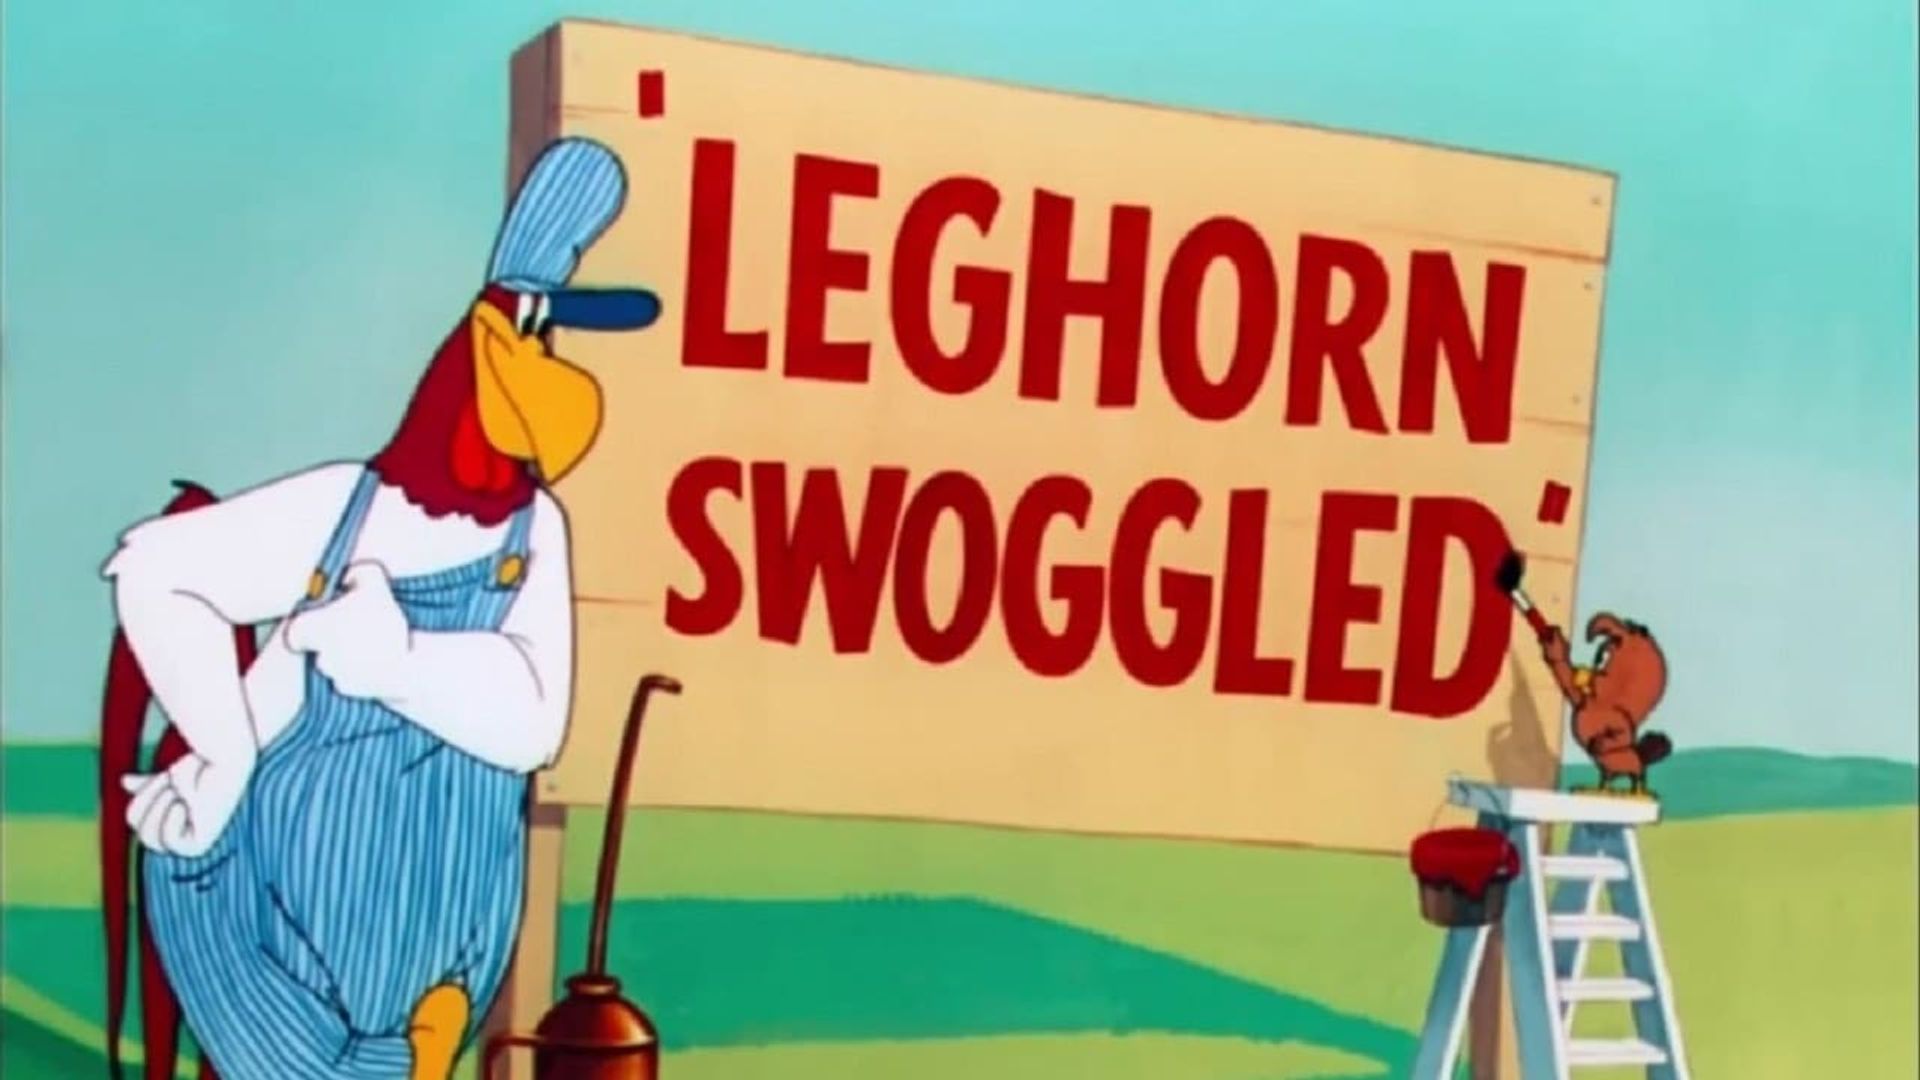 Leghorn Swoggled background